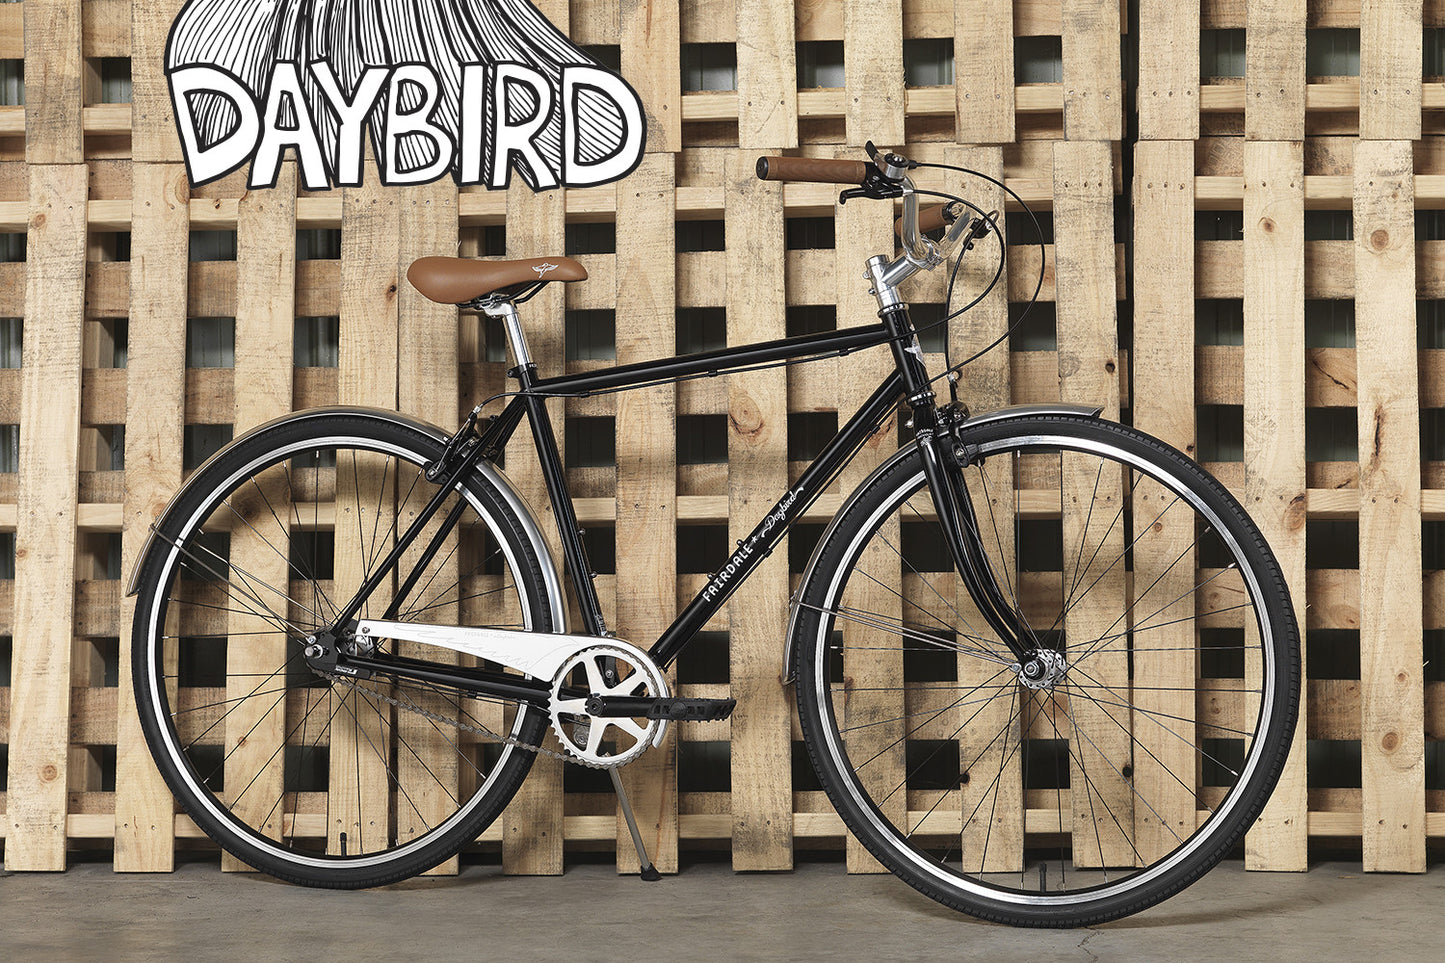 Fairdale Daybird 3-Speed City Bike